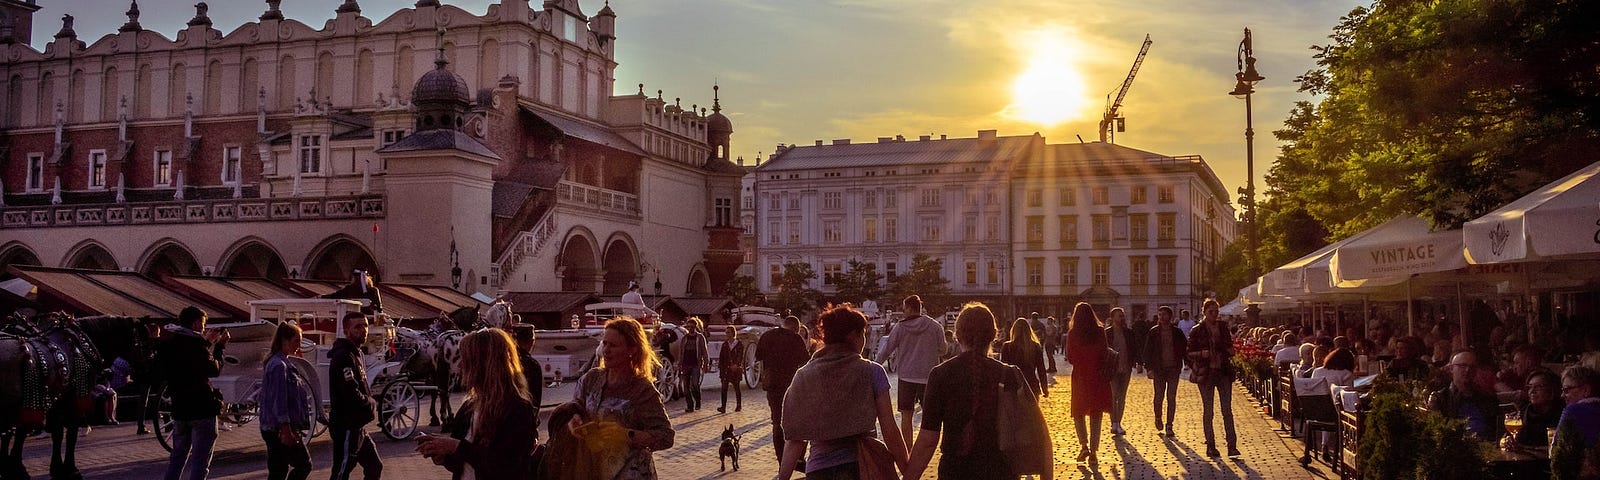 People walking through Main Market Square in Krakow at sunset